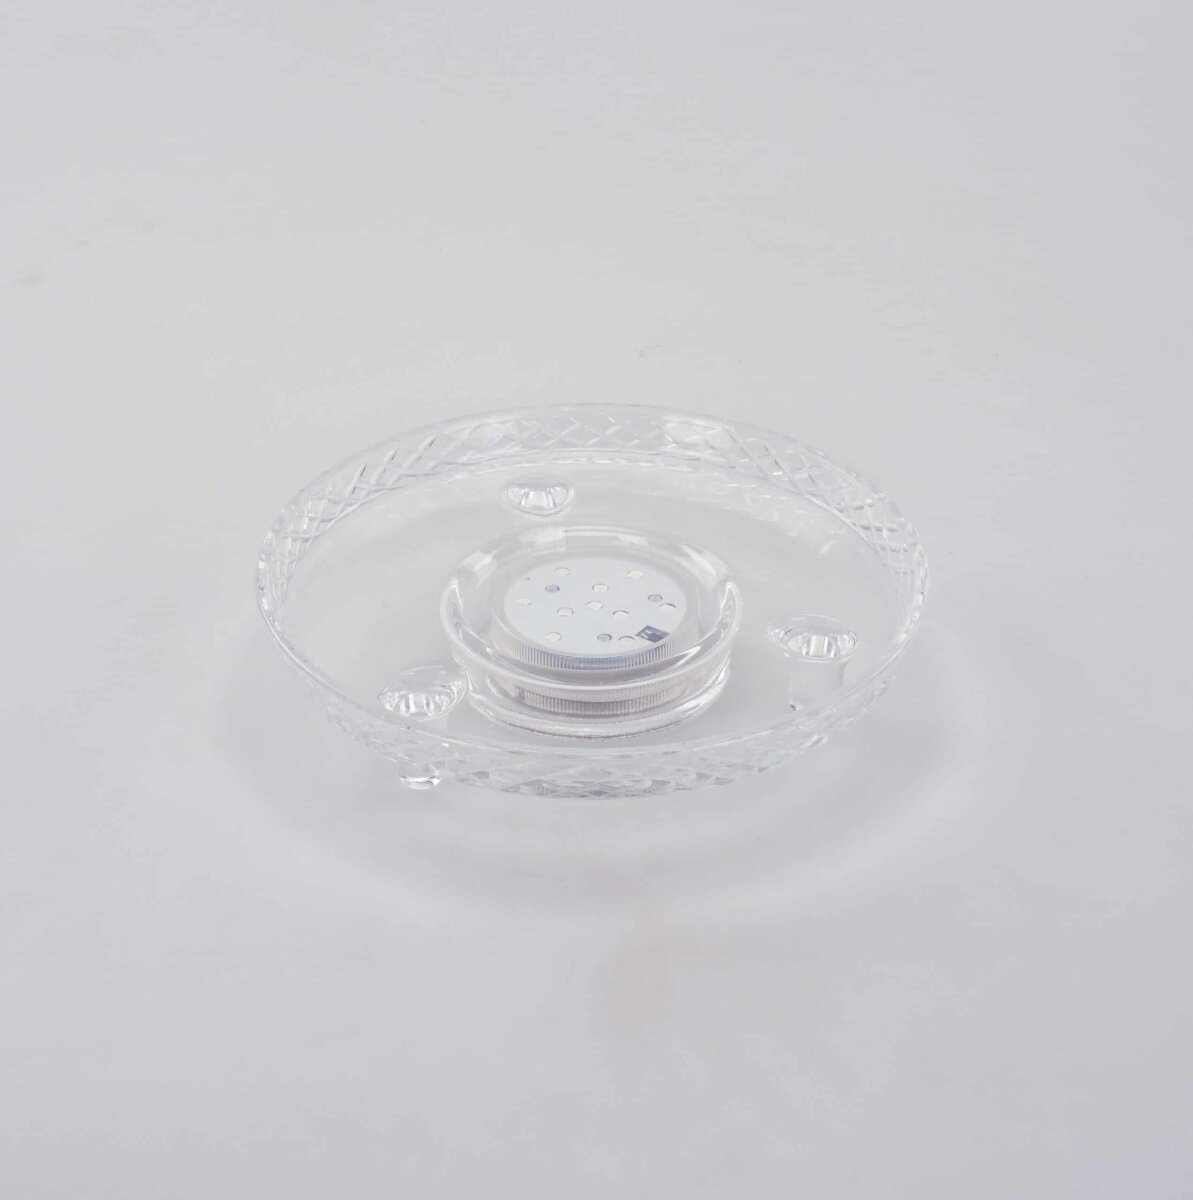 produkt-venookah-led-glas-untersetzer-transparent-cutting-eclipse-led-7cm-16-farben-